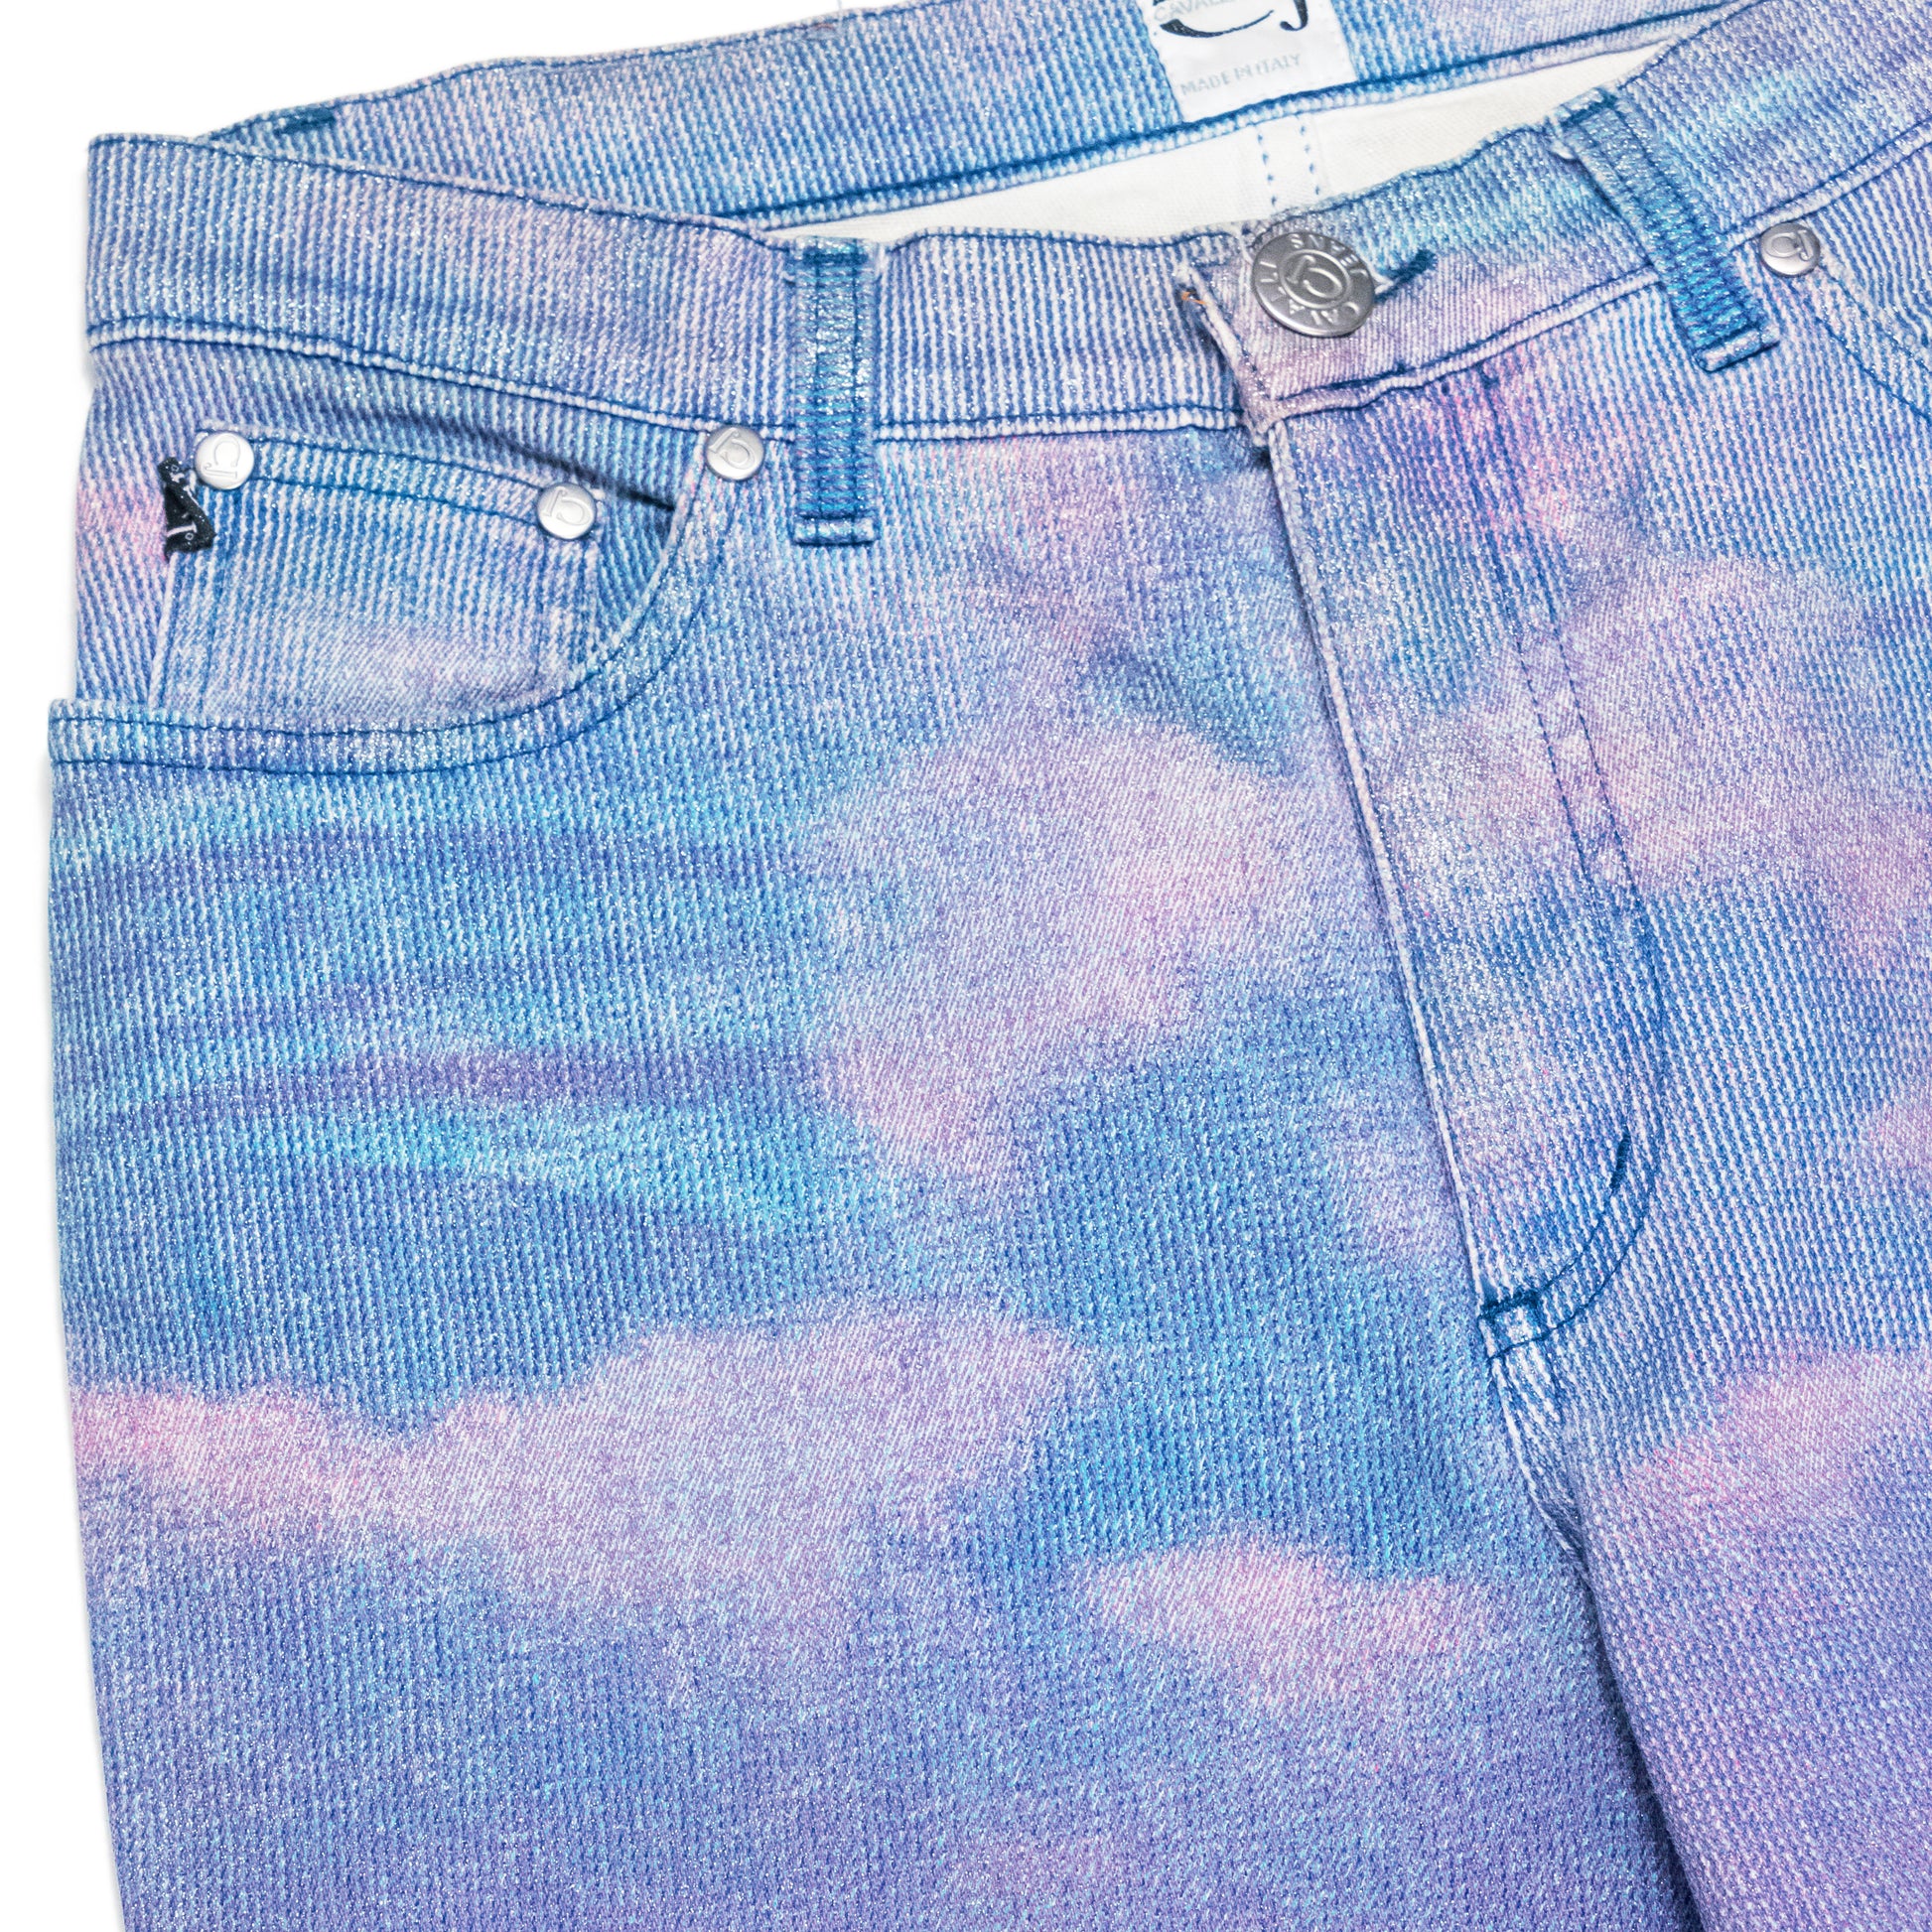 Cavalli Painted Glitter Jeans - SILVER LEAGUE